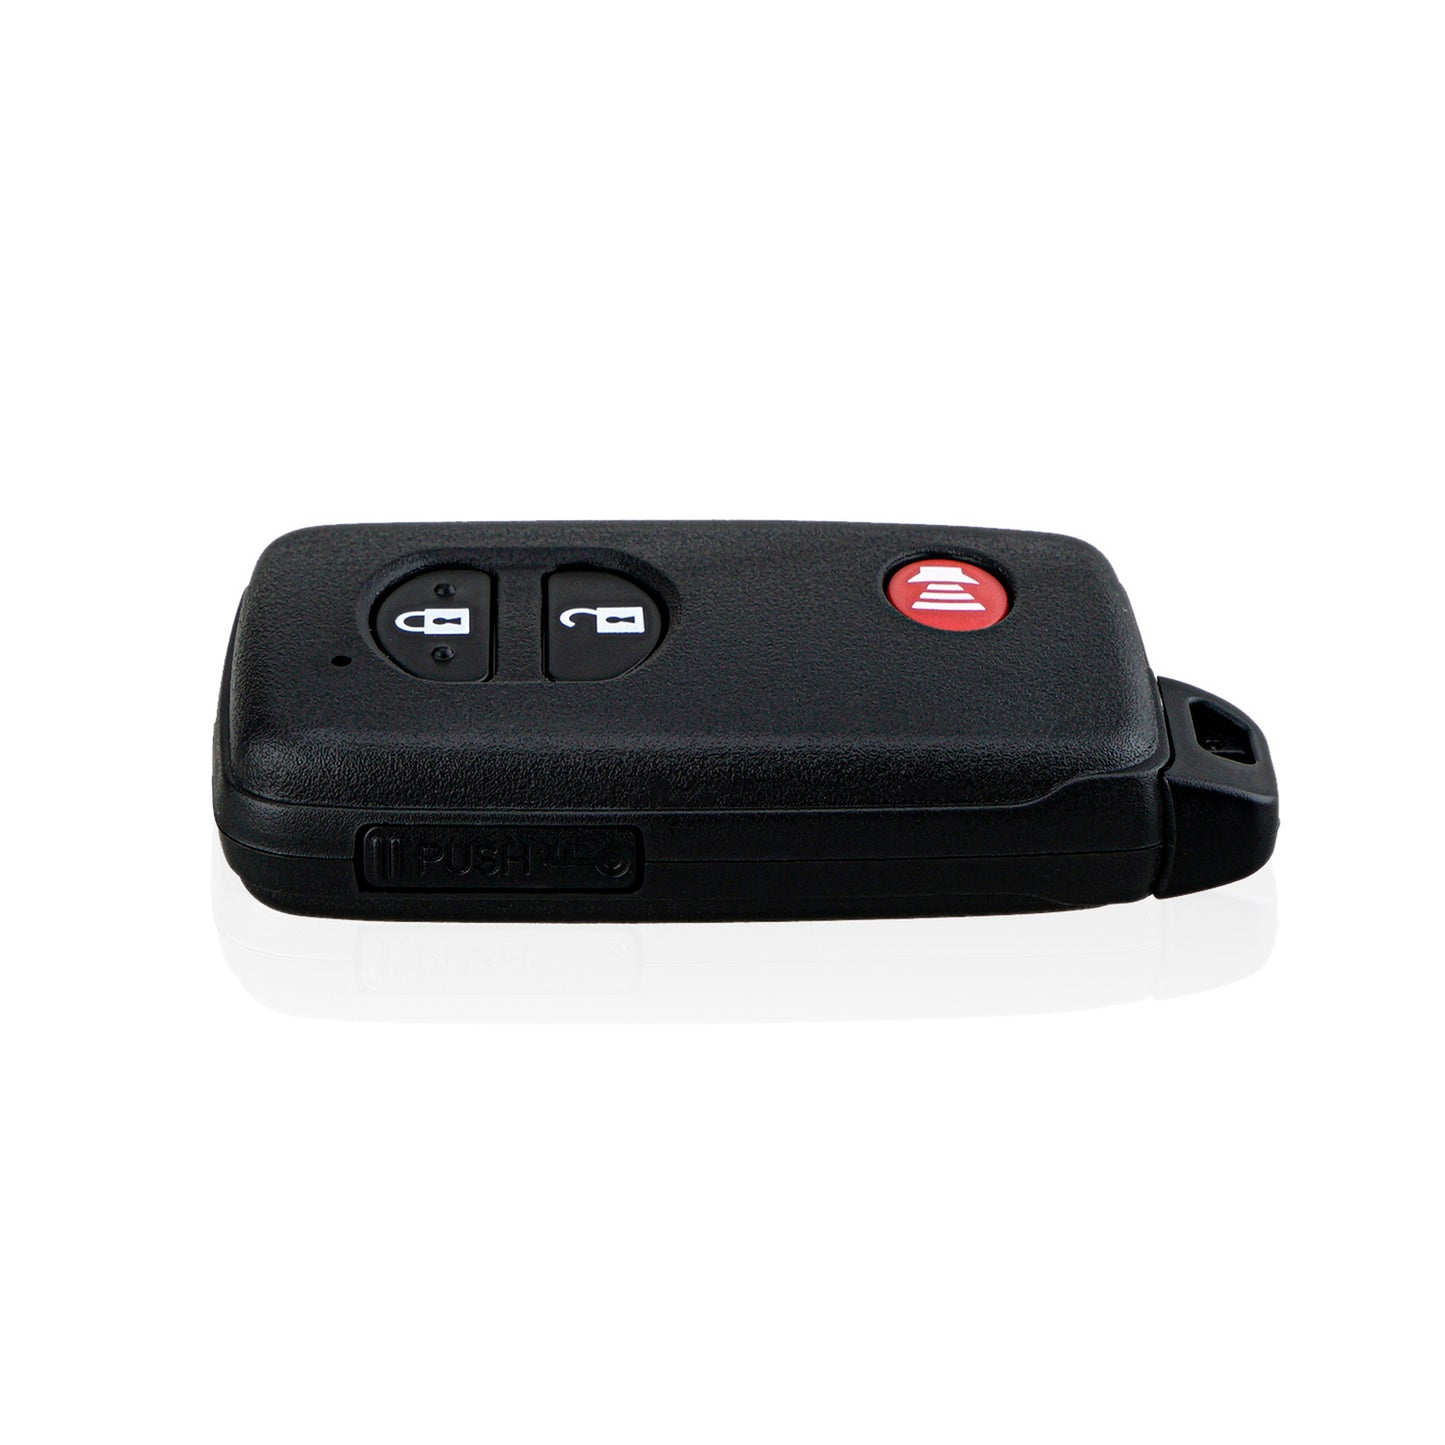 3 Buttons 315MHz Keyless Entry Fob Remote Car Key For 2008 - 2015 Toyota Landcruiser Rav 4FCC ID: HYQ14AEM SKU : J865